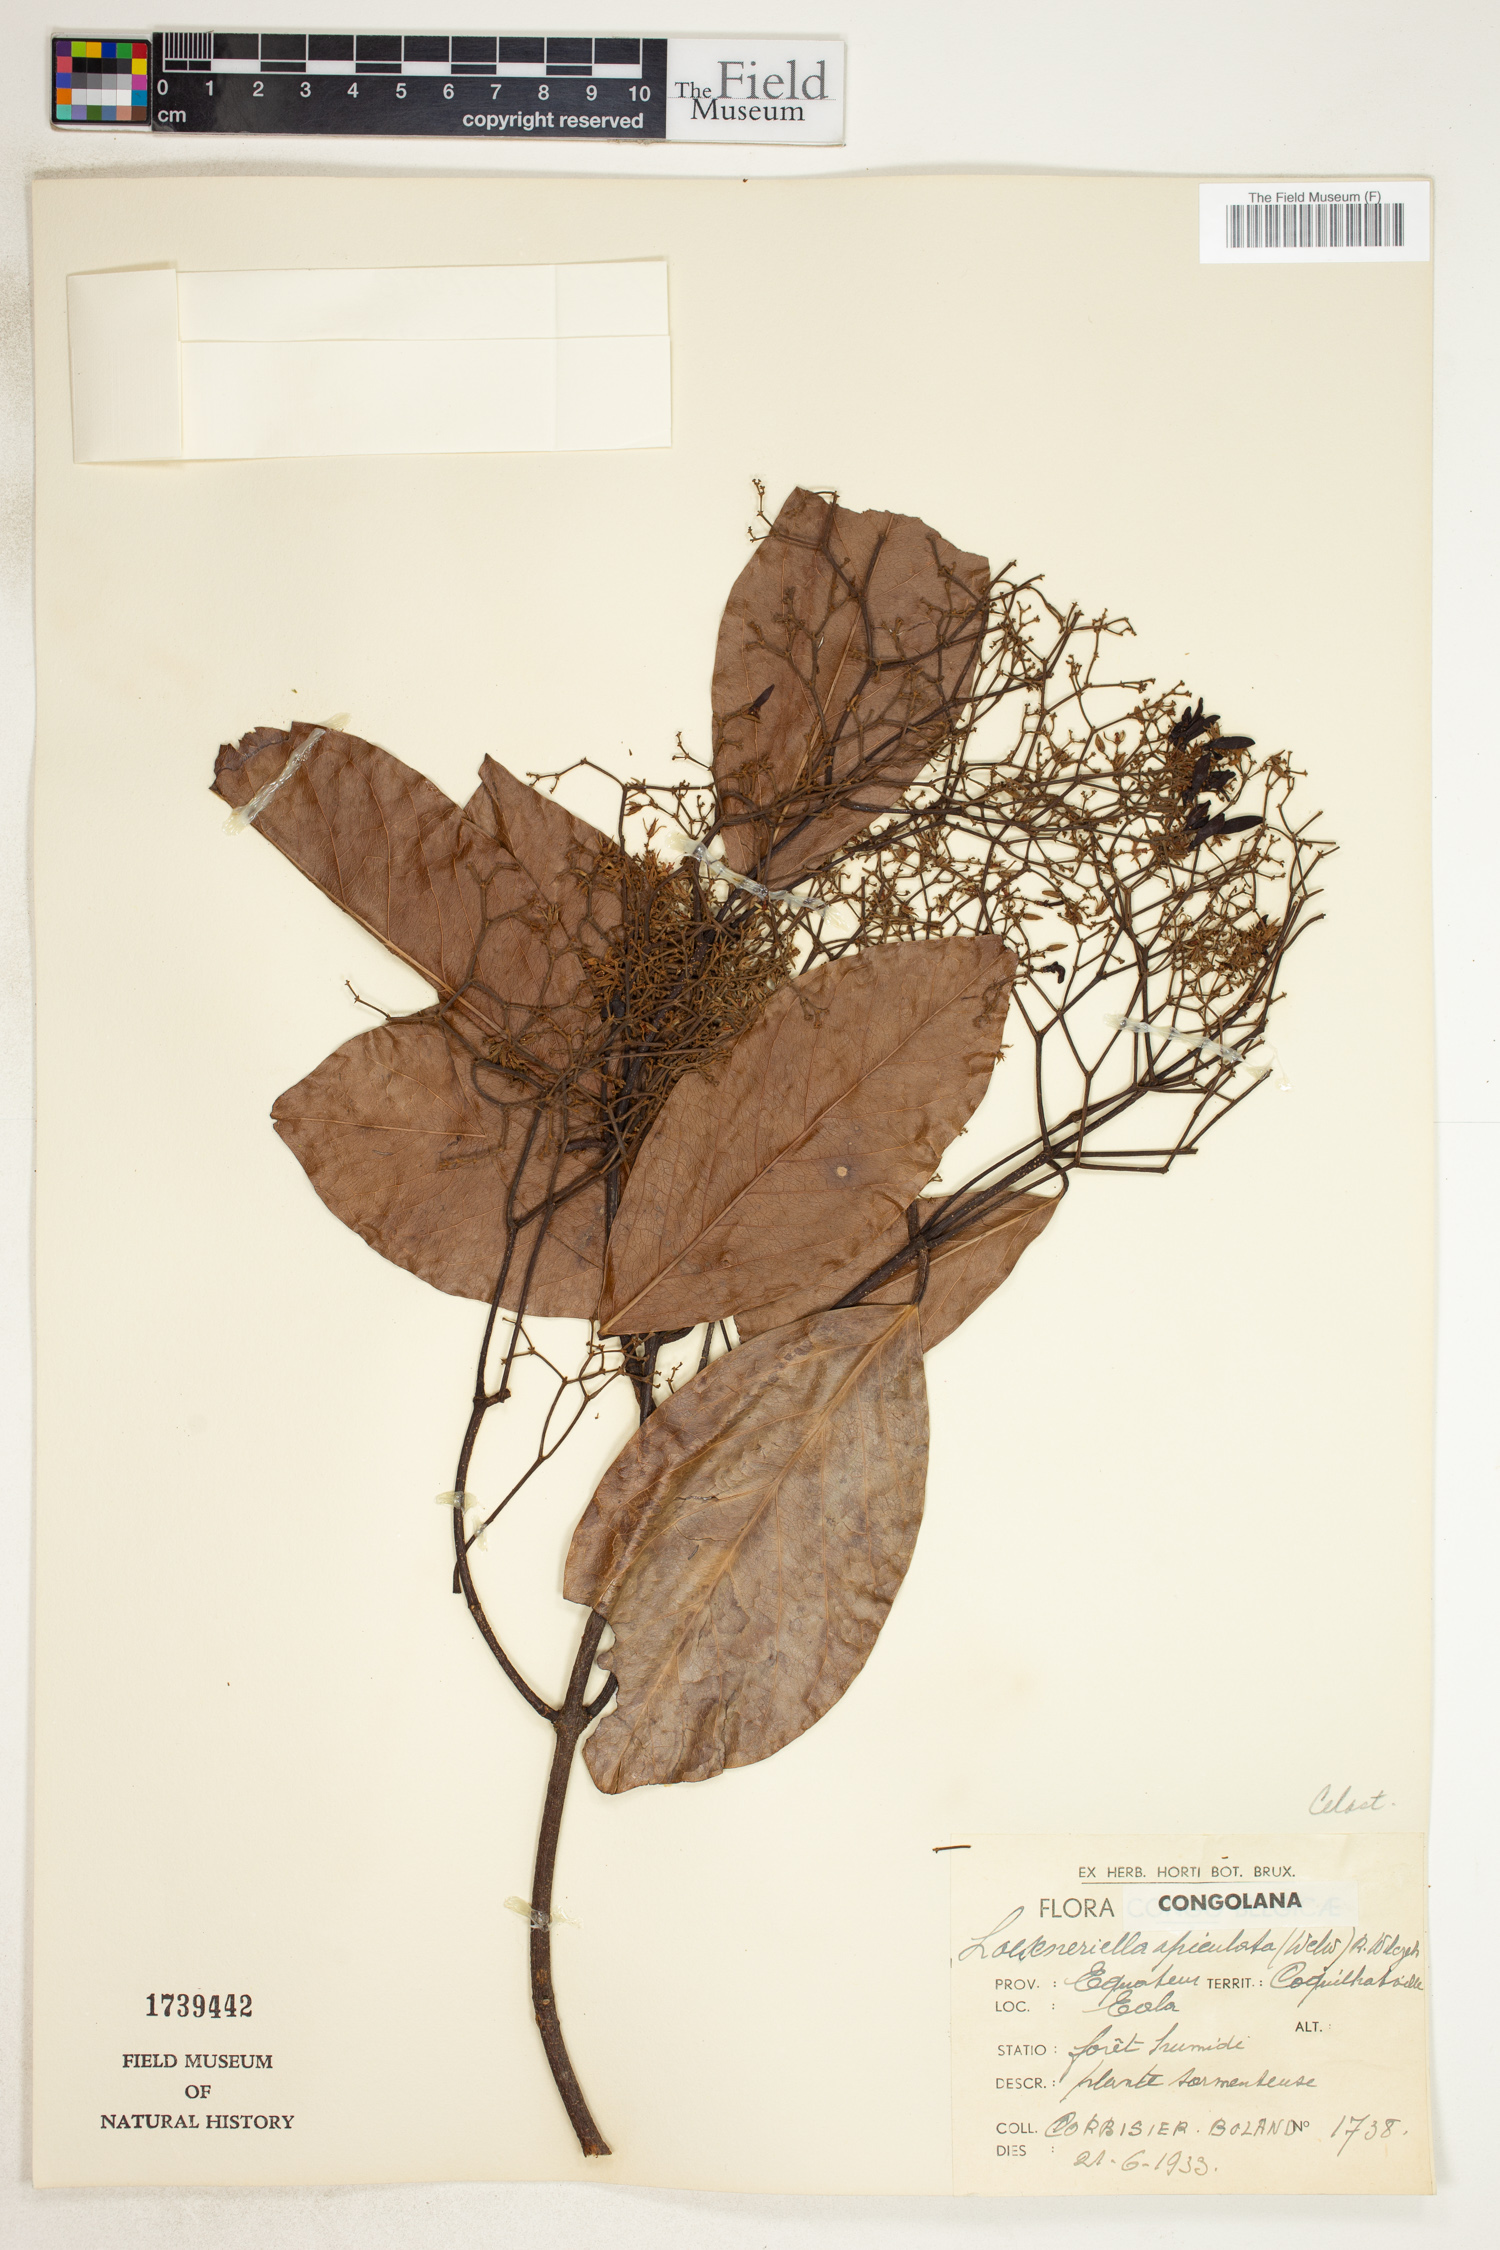 Loeseneriella apiculata image